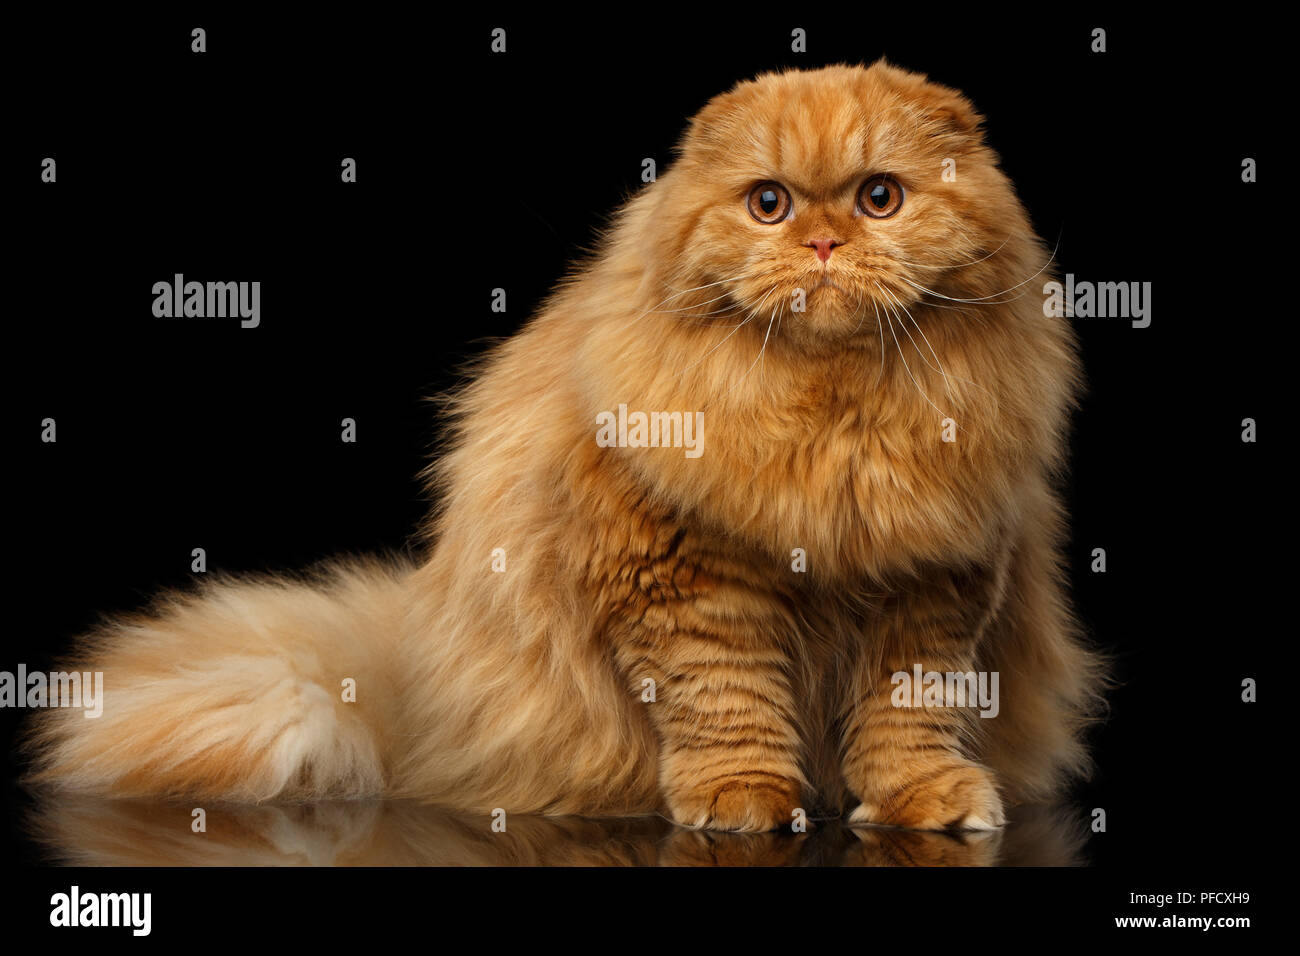 fat fluffy orange cat